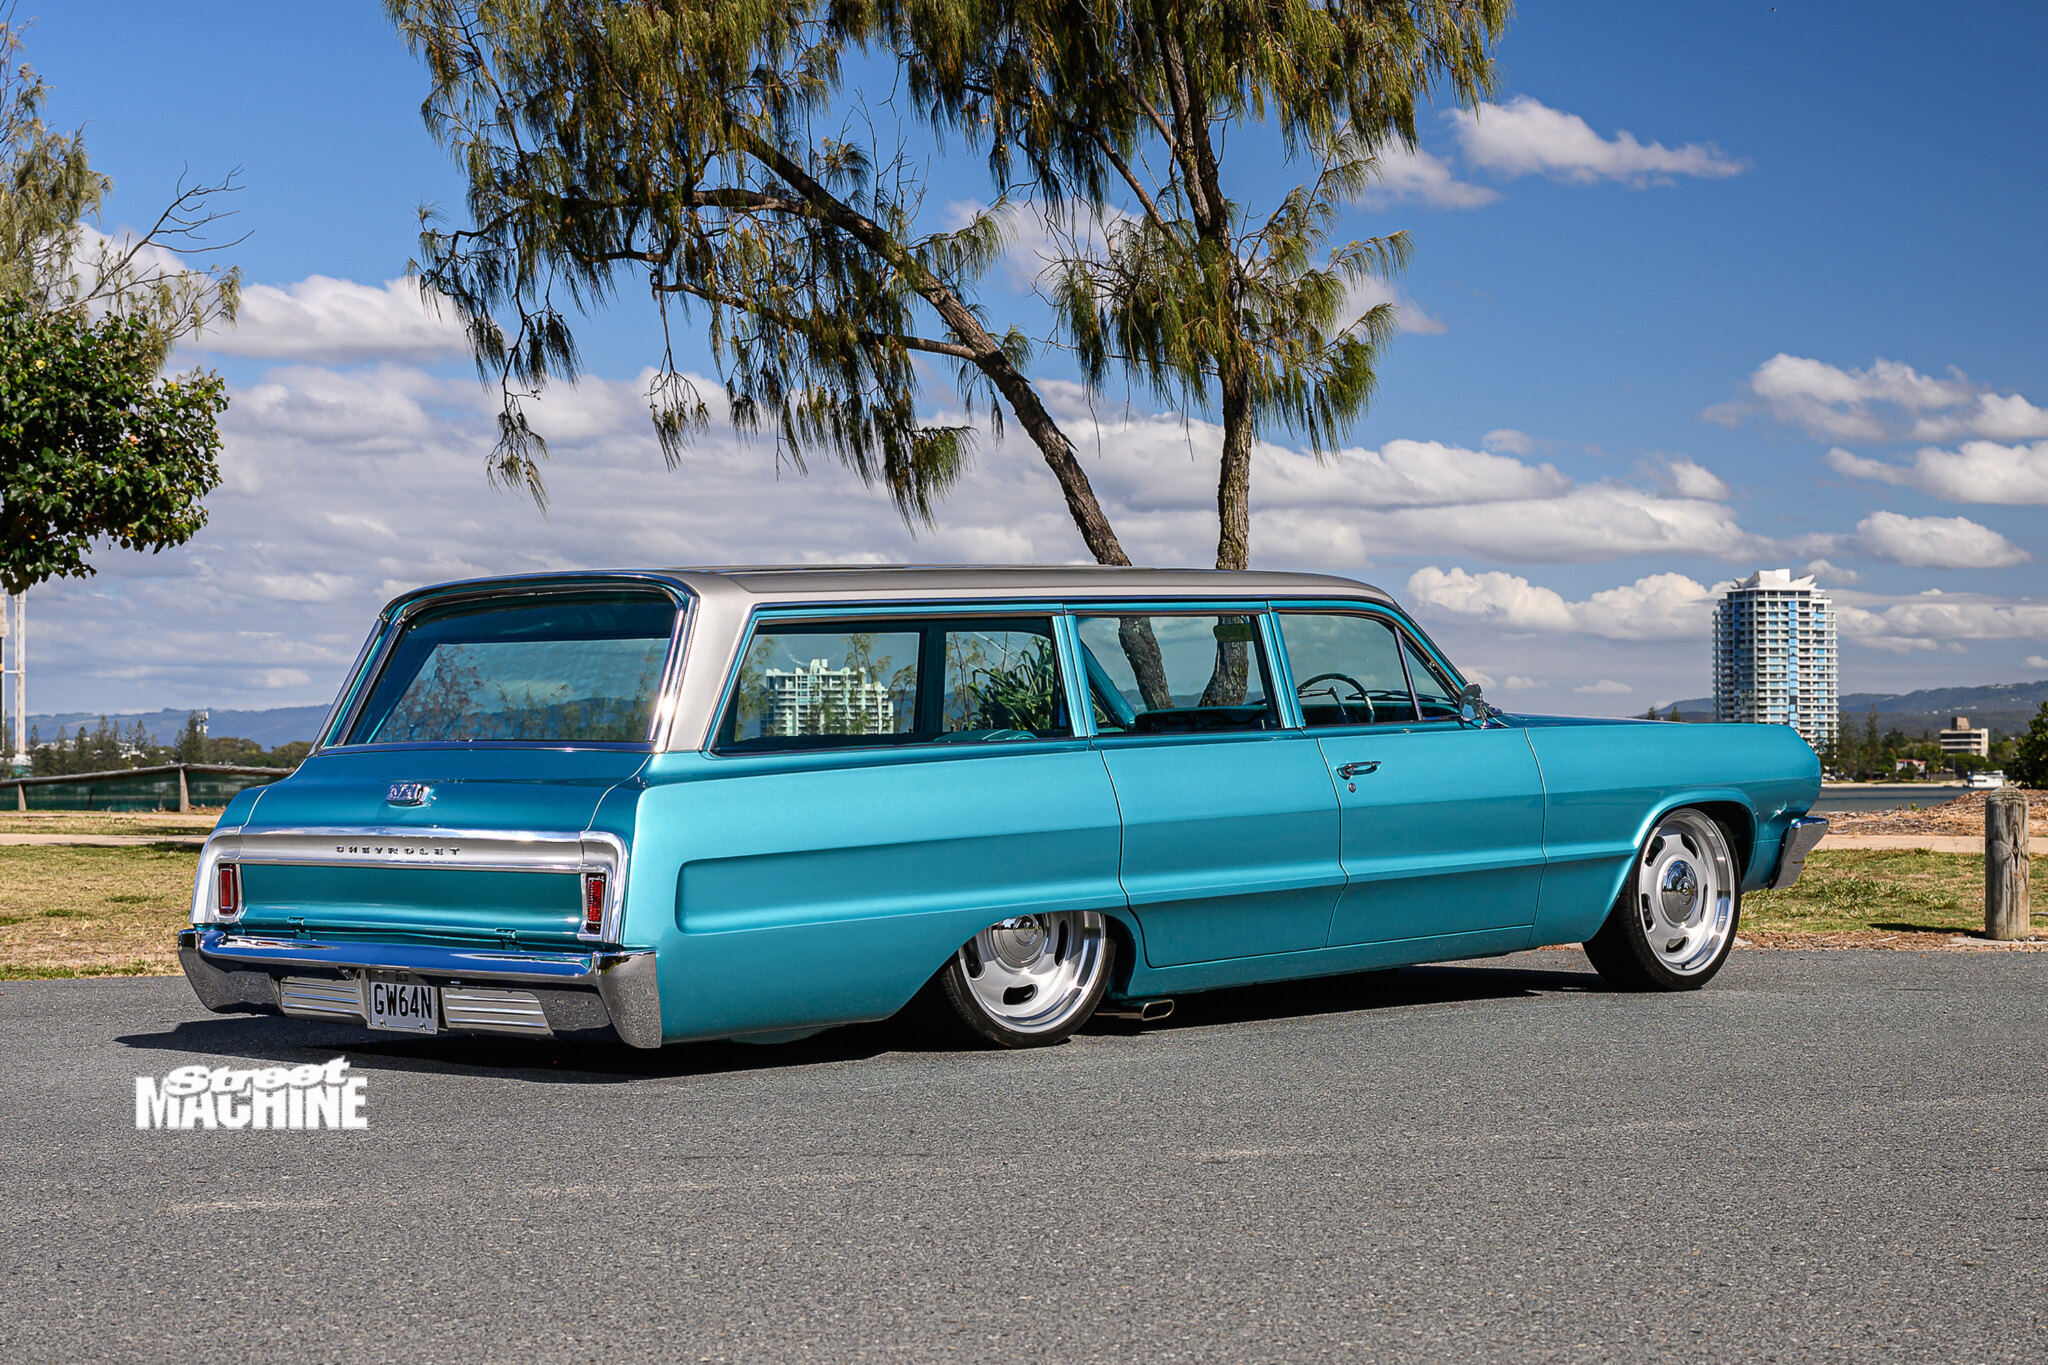 Bagged, Top 60 1964 Chev Impala wagon